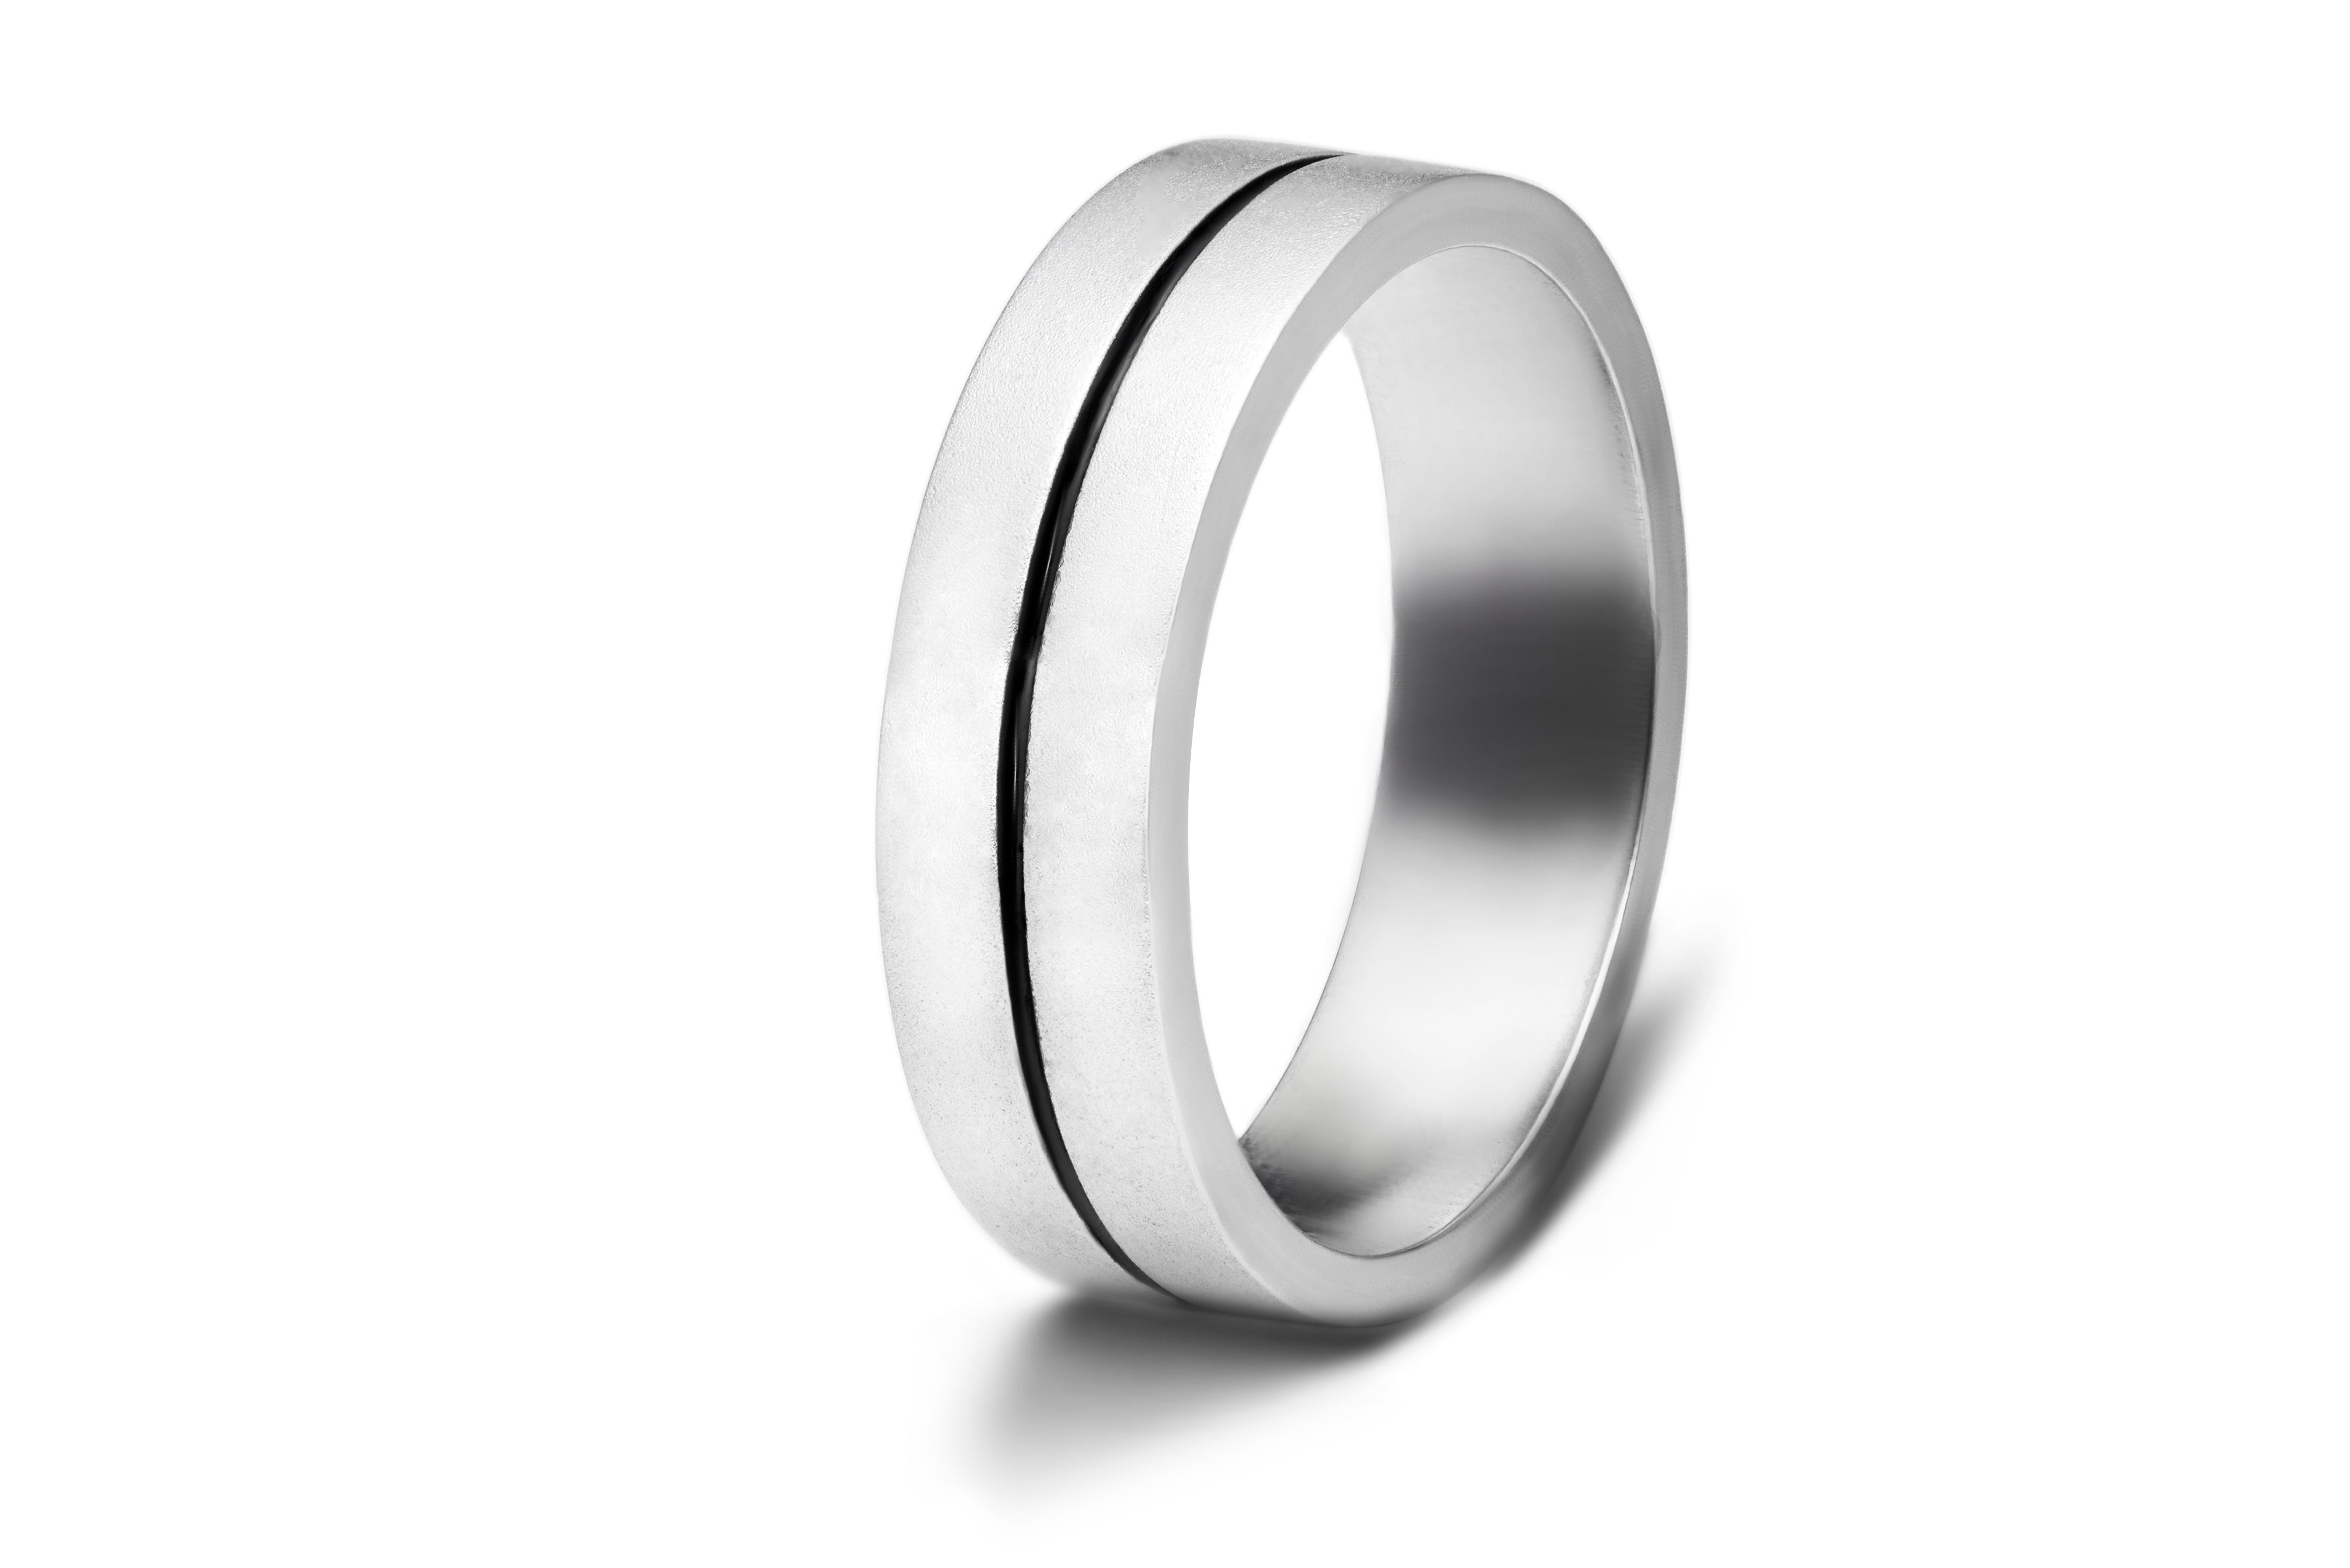 Silver Rings - Buy Silver Rings Online Starting at Just ₹104 | Meesho